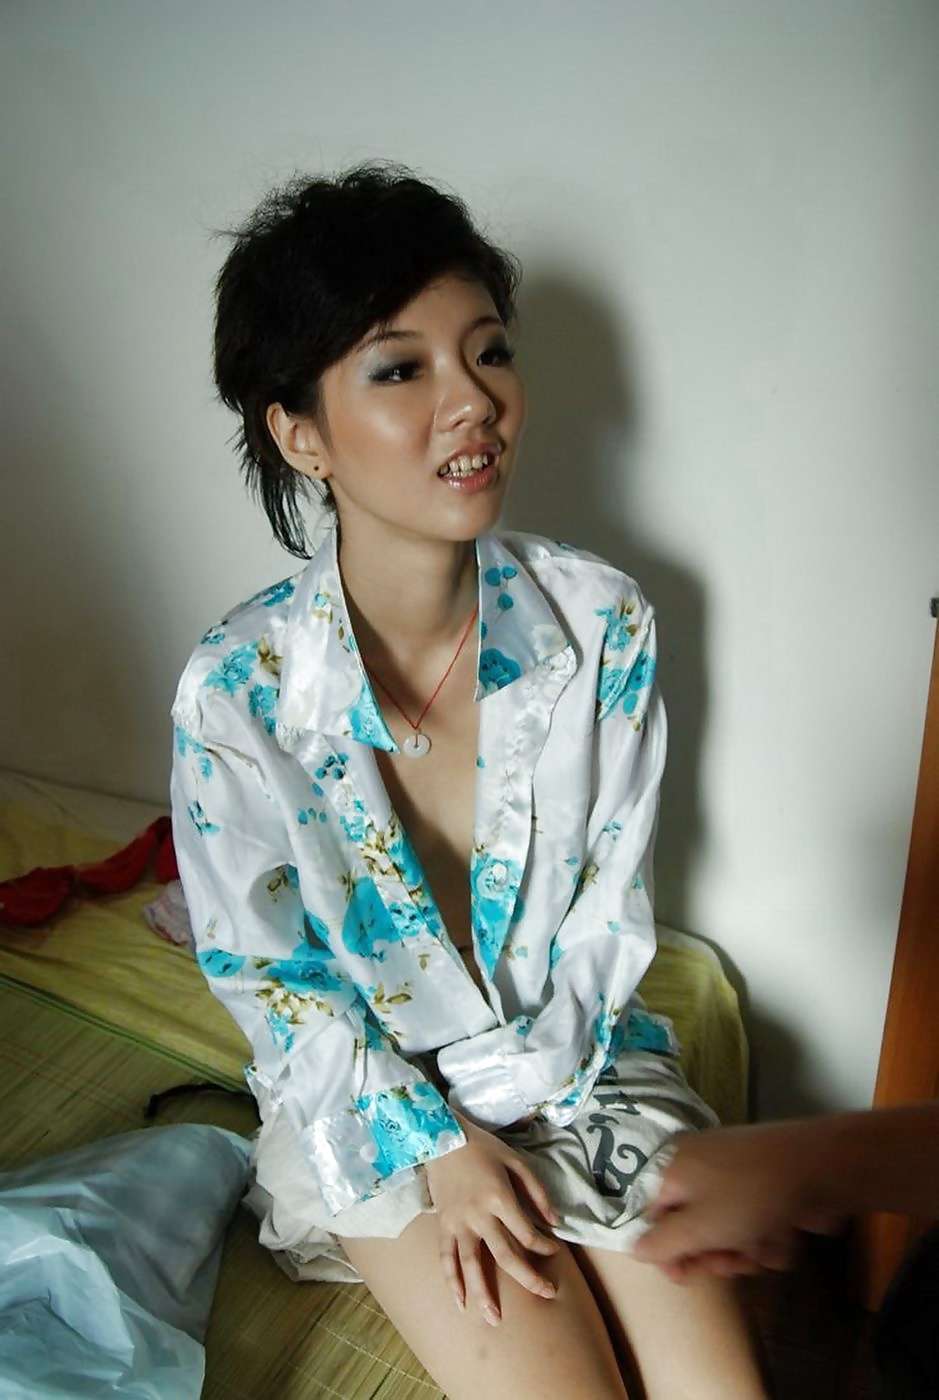 Hot amateur asian girl poses naked